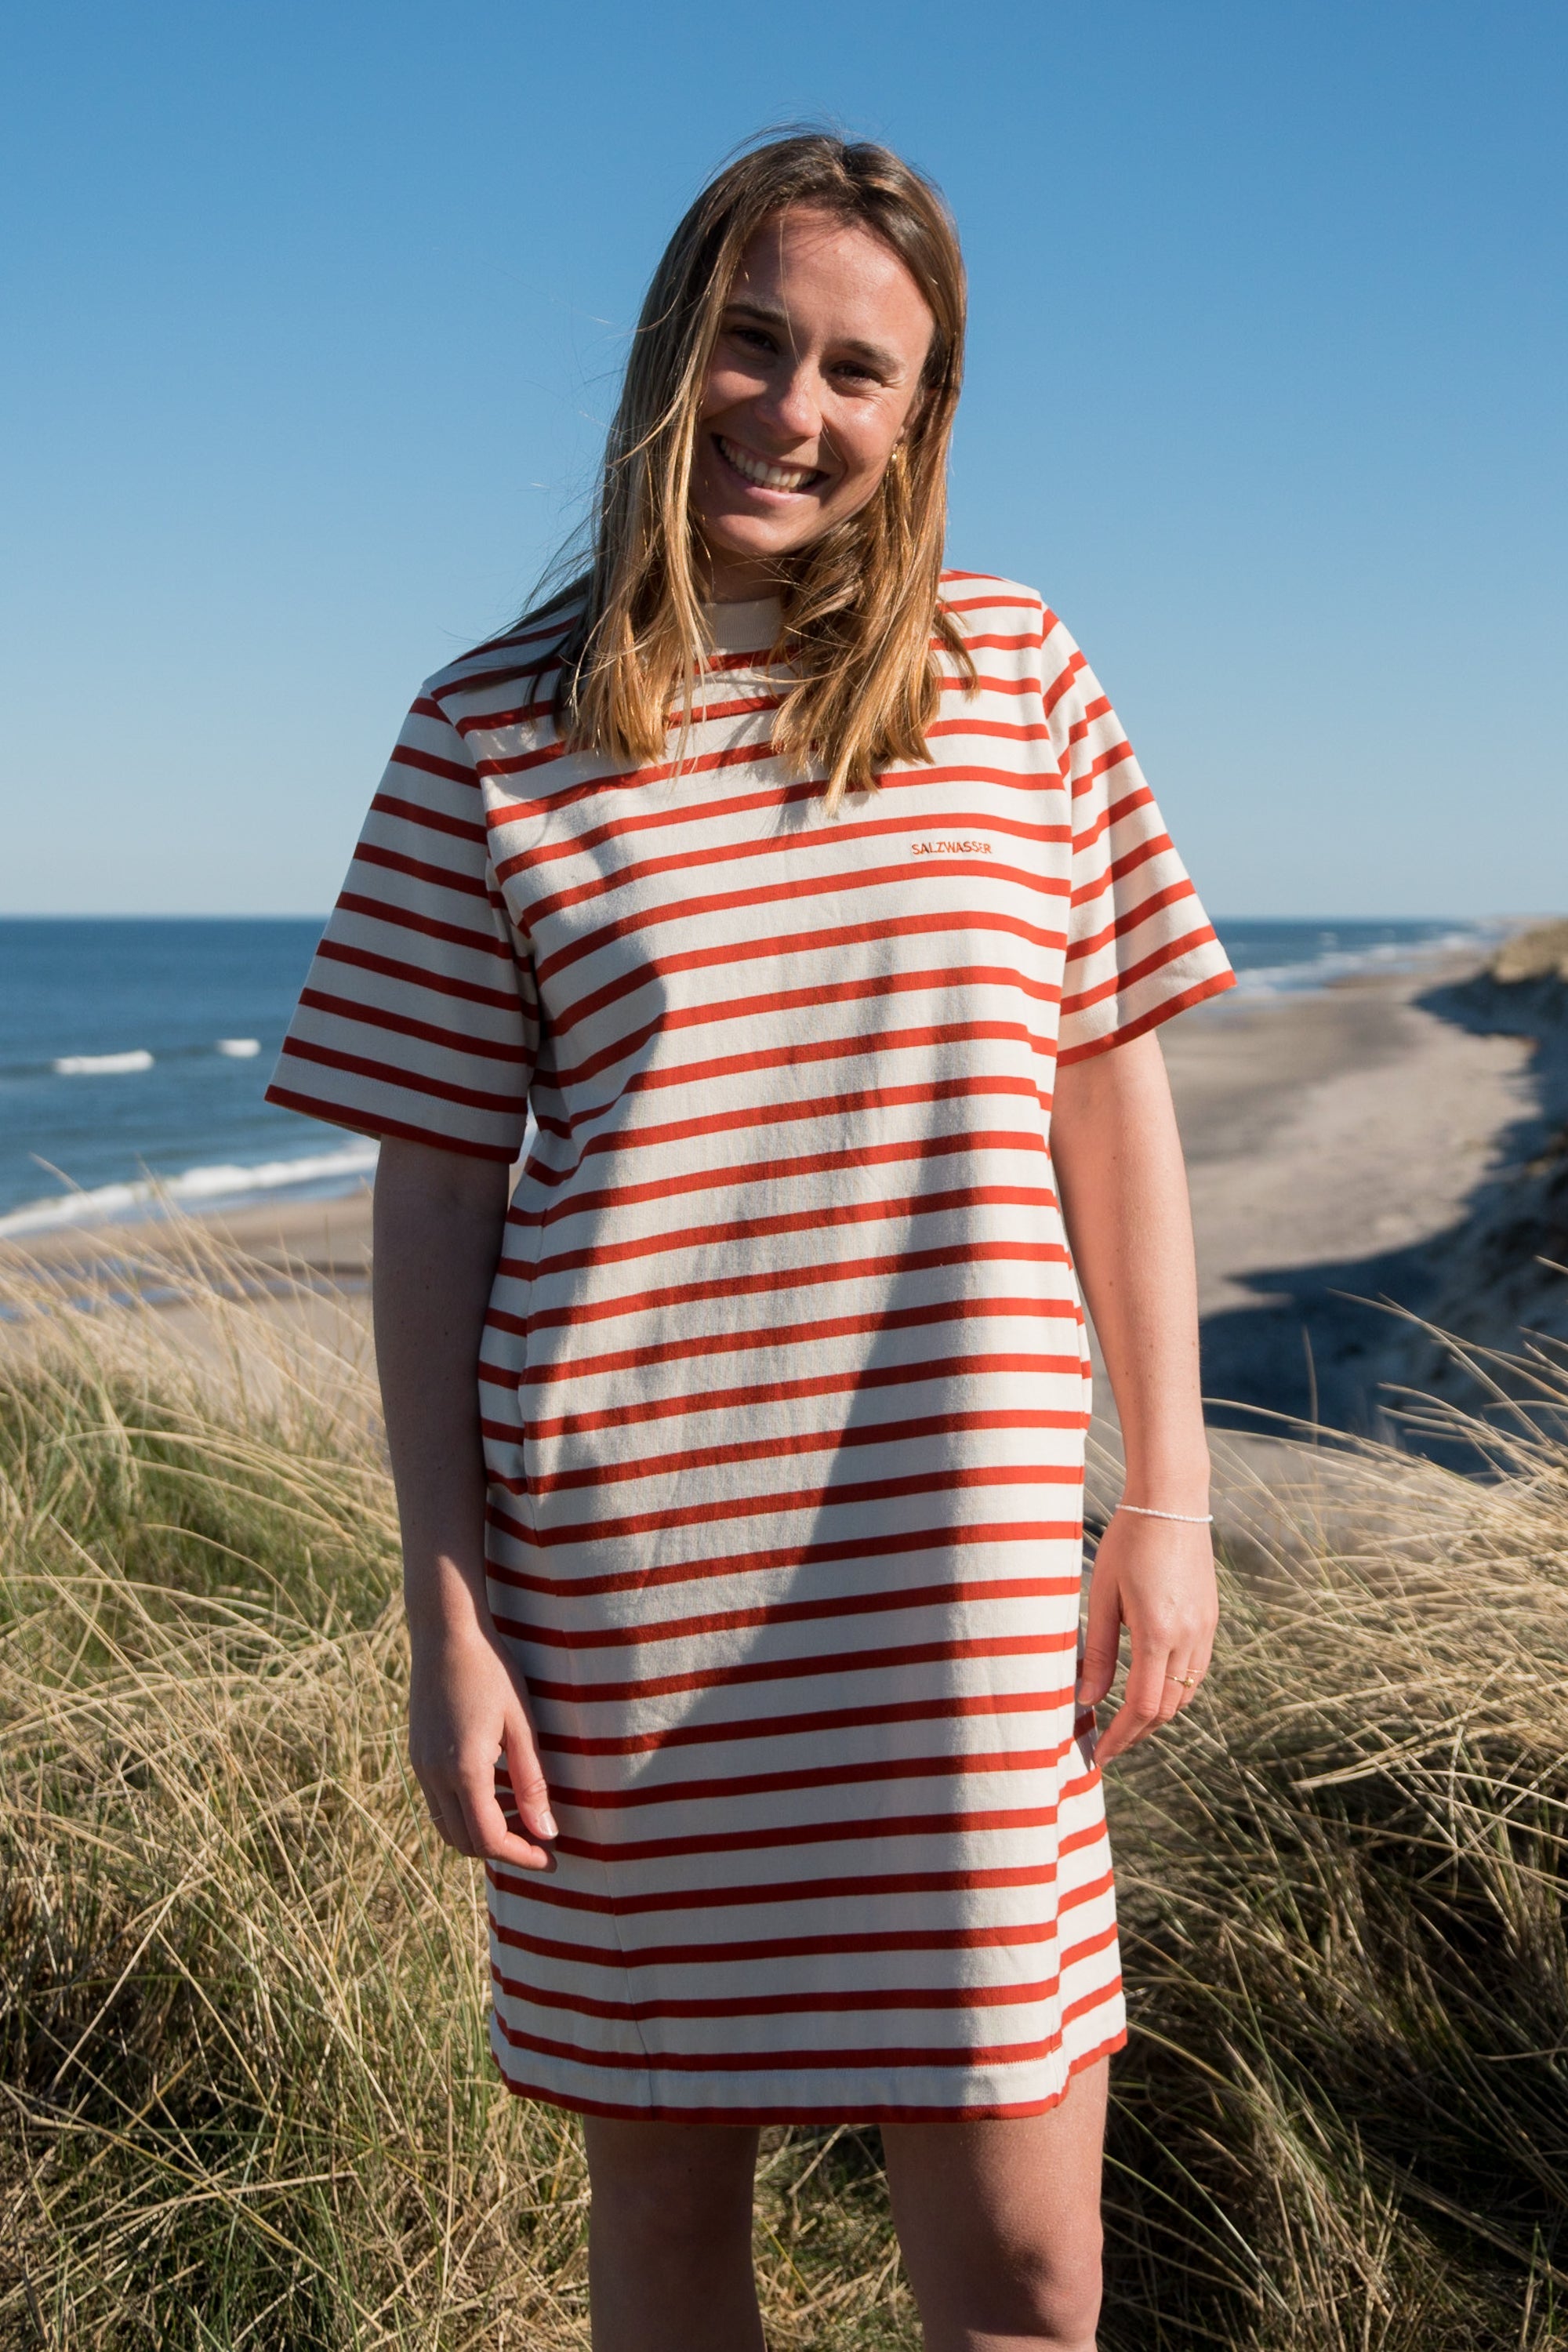 T-shirt dress Sol Orange-Striped made of organic cotton from Salzwasser